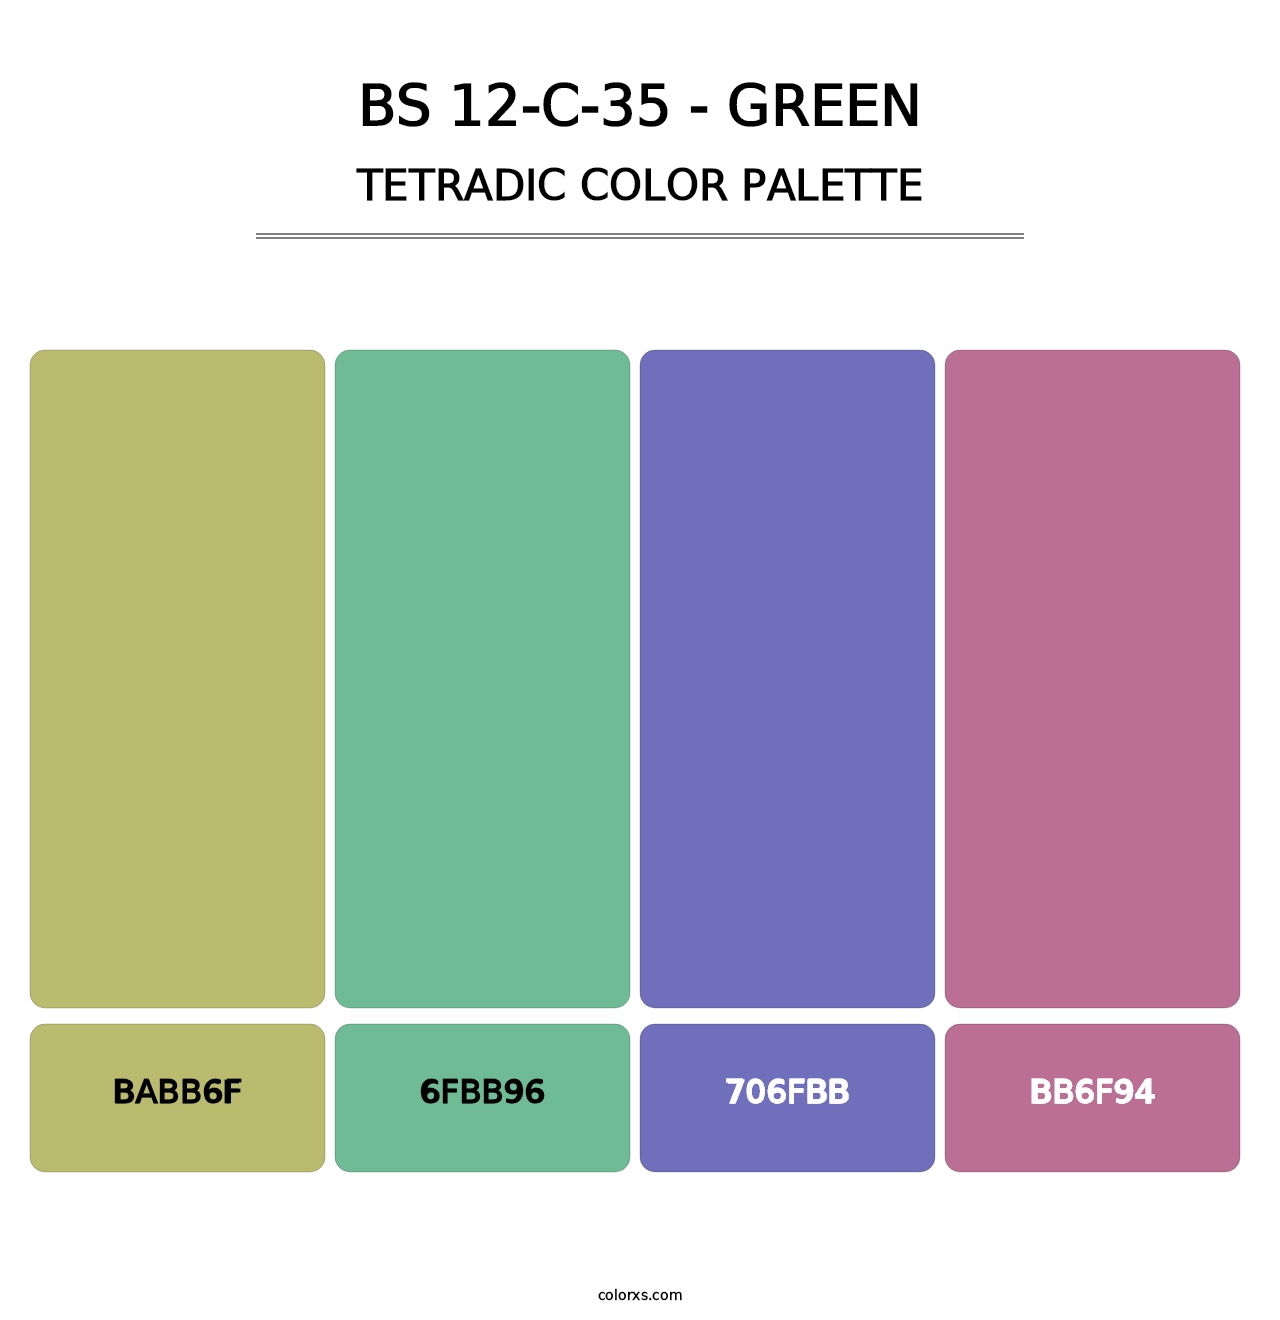 BS 12-C-35 - Green - Tetradic Color Palette